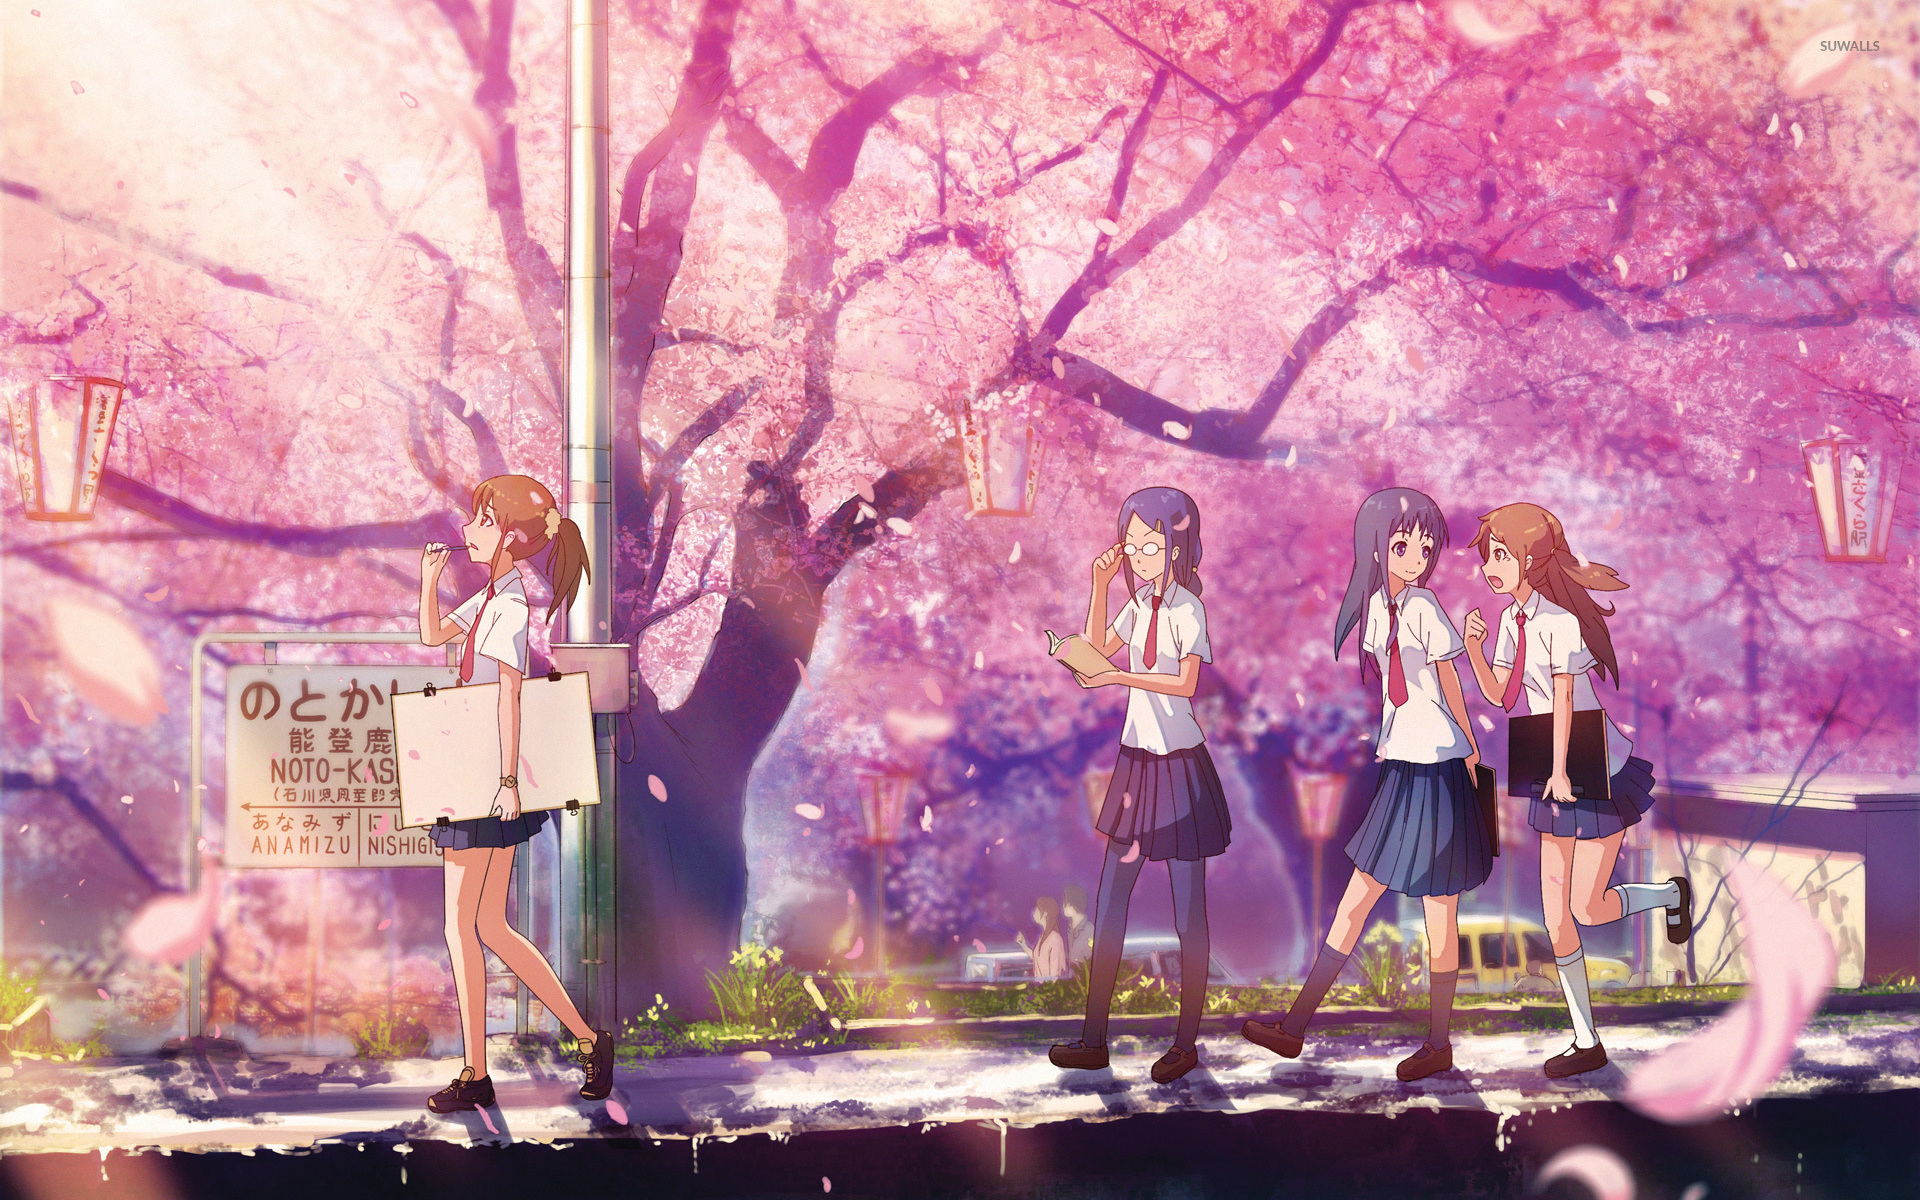 Wallpaper ID 126929  anime anime girls spring Sakura blossom romantic  free download